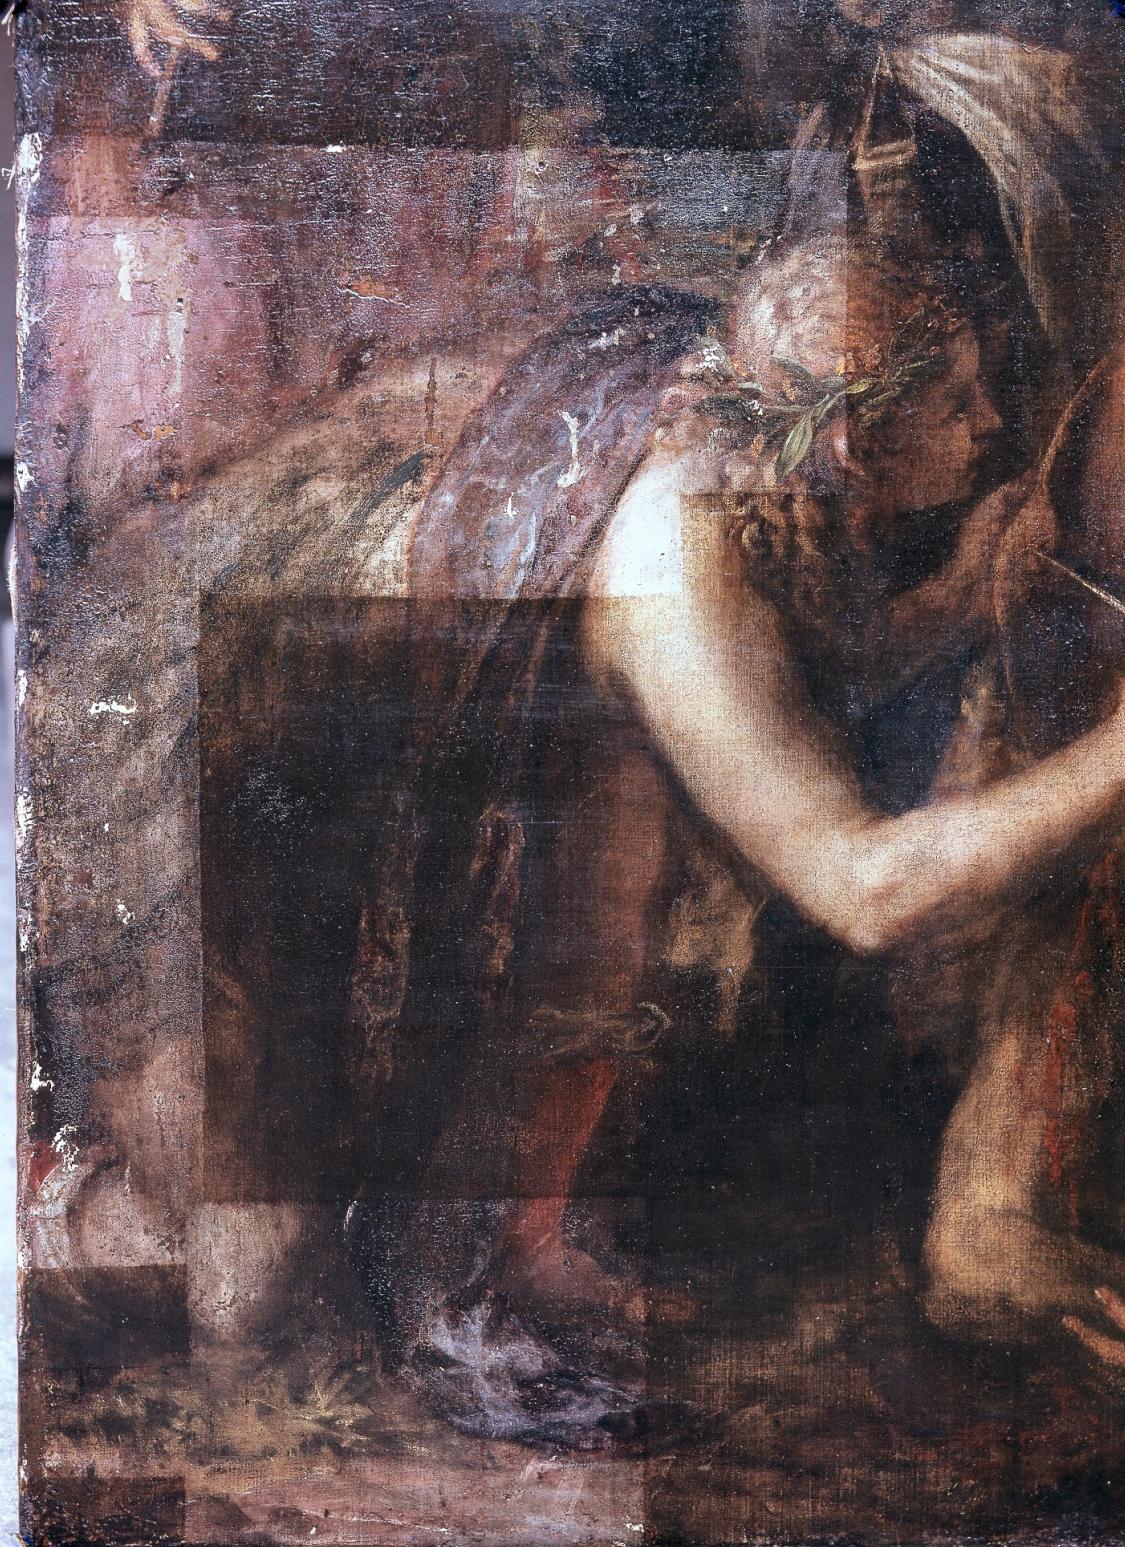 Obrázek 18: Tiziano Vecellio, Apollo a Marsyas, 1550-1576, olej, plátno,